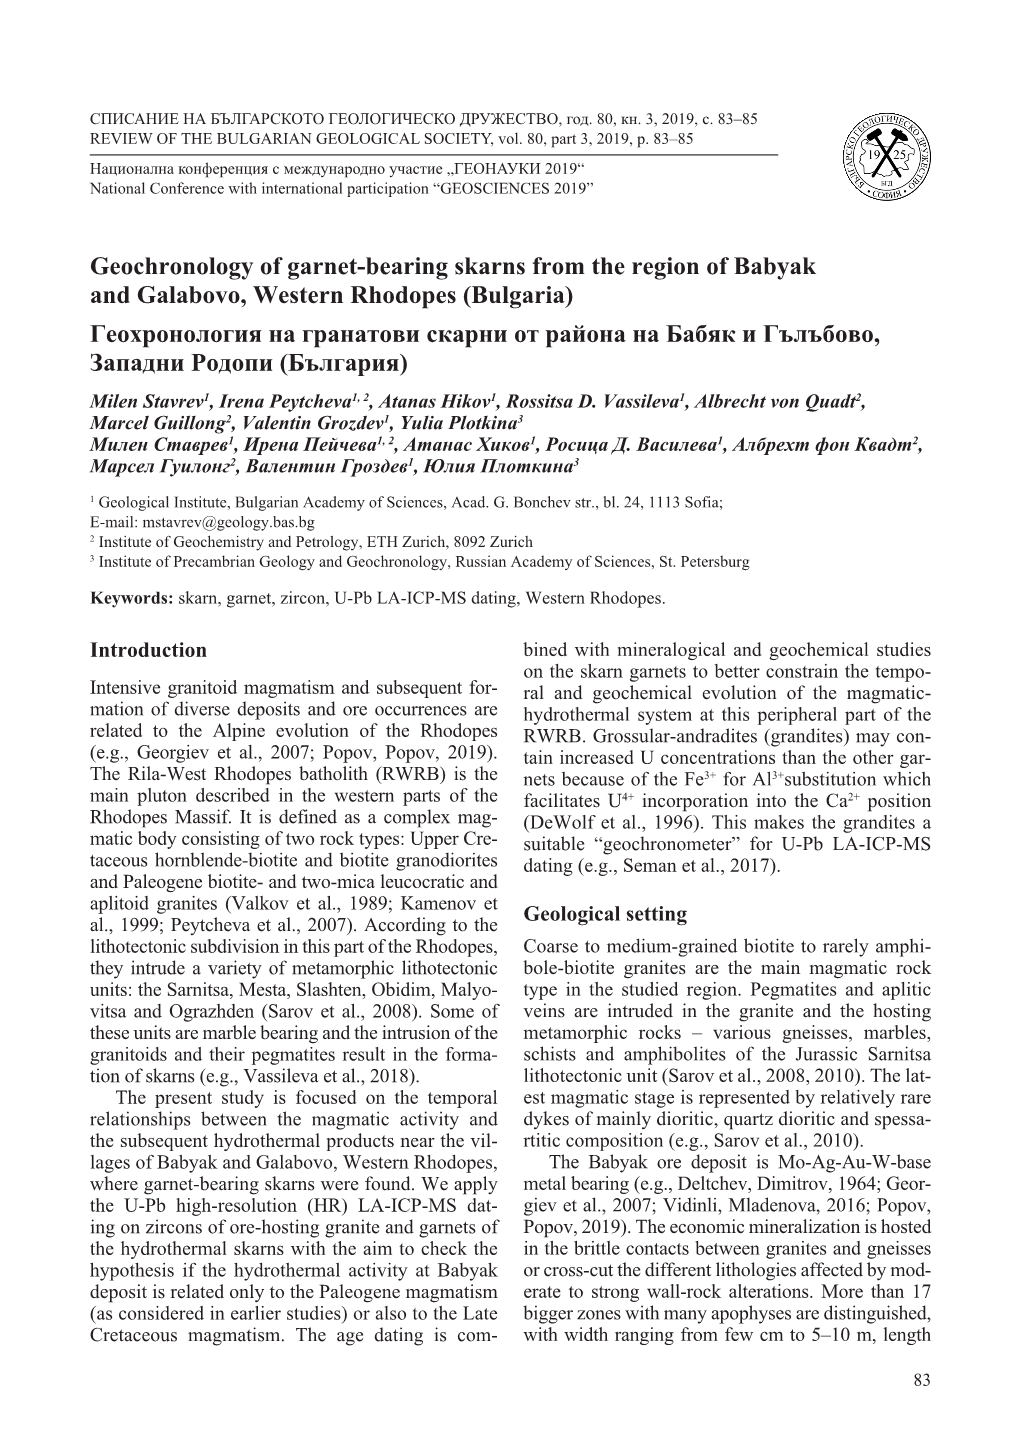 Geochronology of Garnet-Bearing Skarns from the Region of Babyak